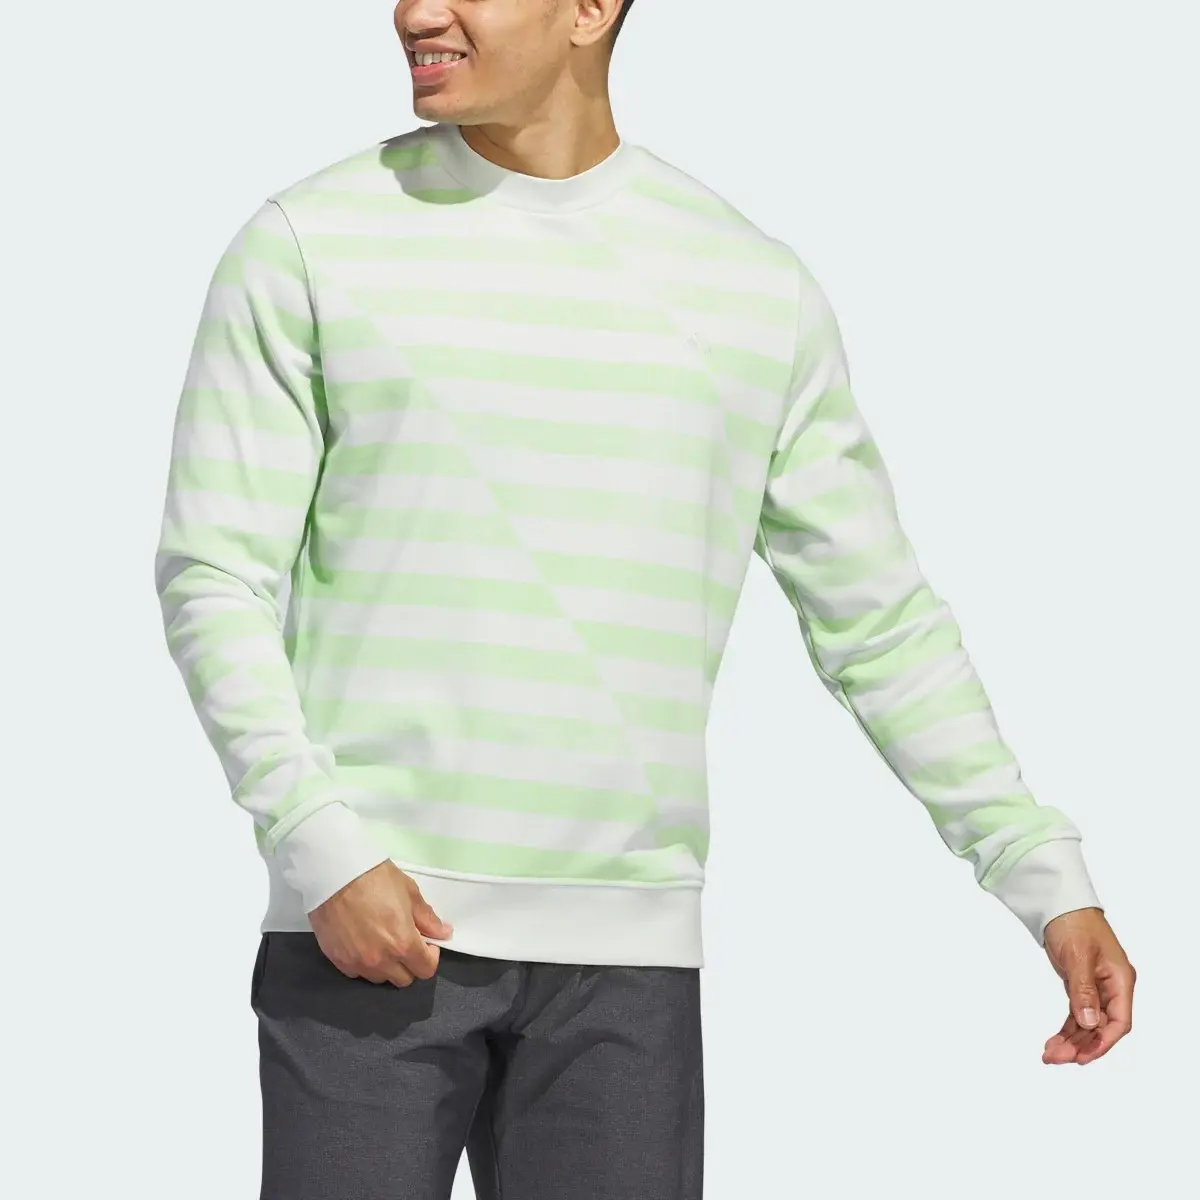 Adidas Ultimate365 Printed Sweatshirt. 1